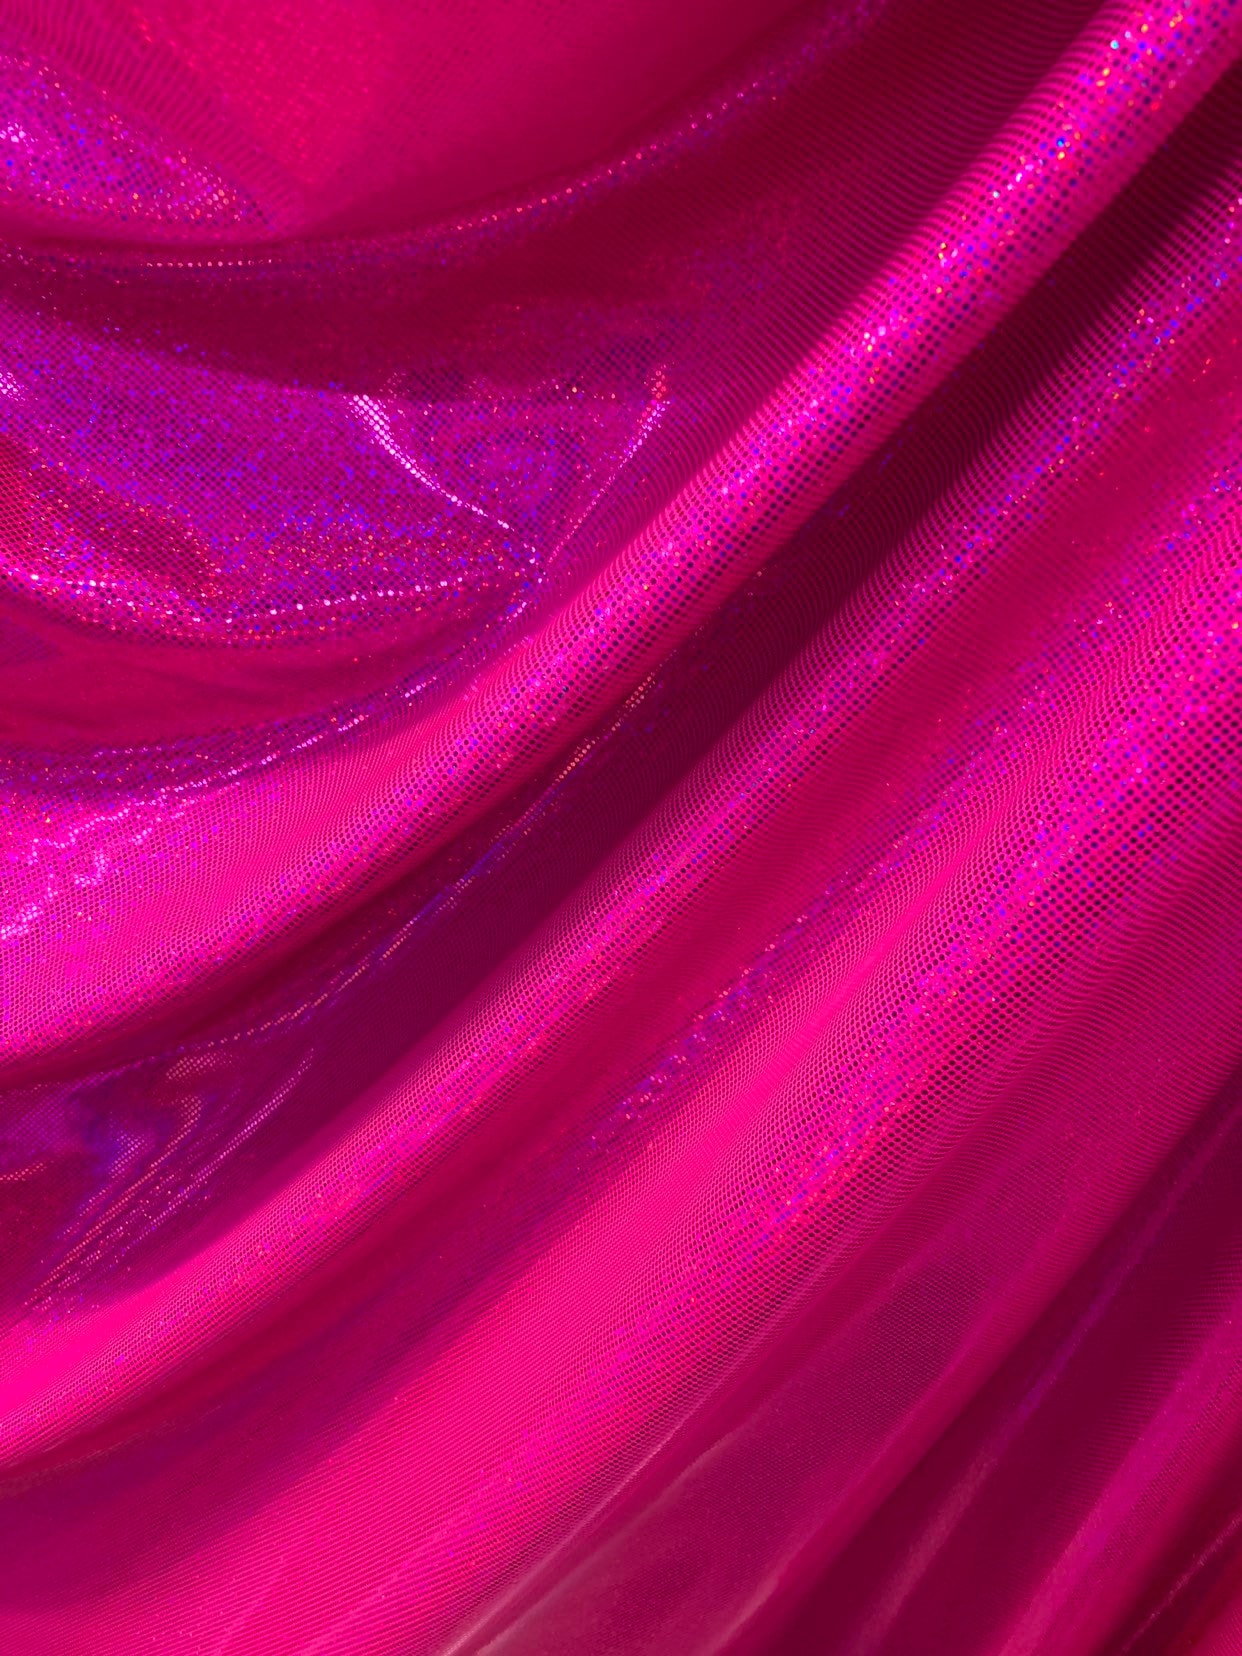 Hologram Metallic Dots Hot Pink Fushia Nylon Spandex 4way | Etsy